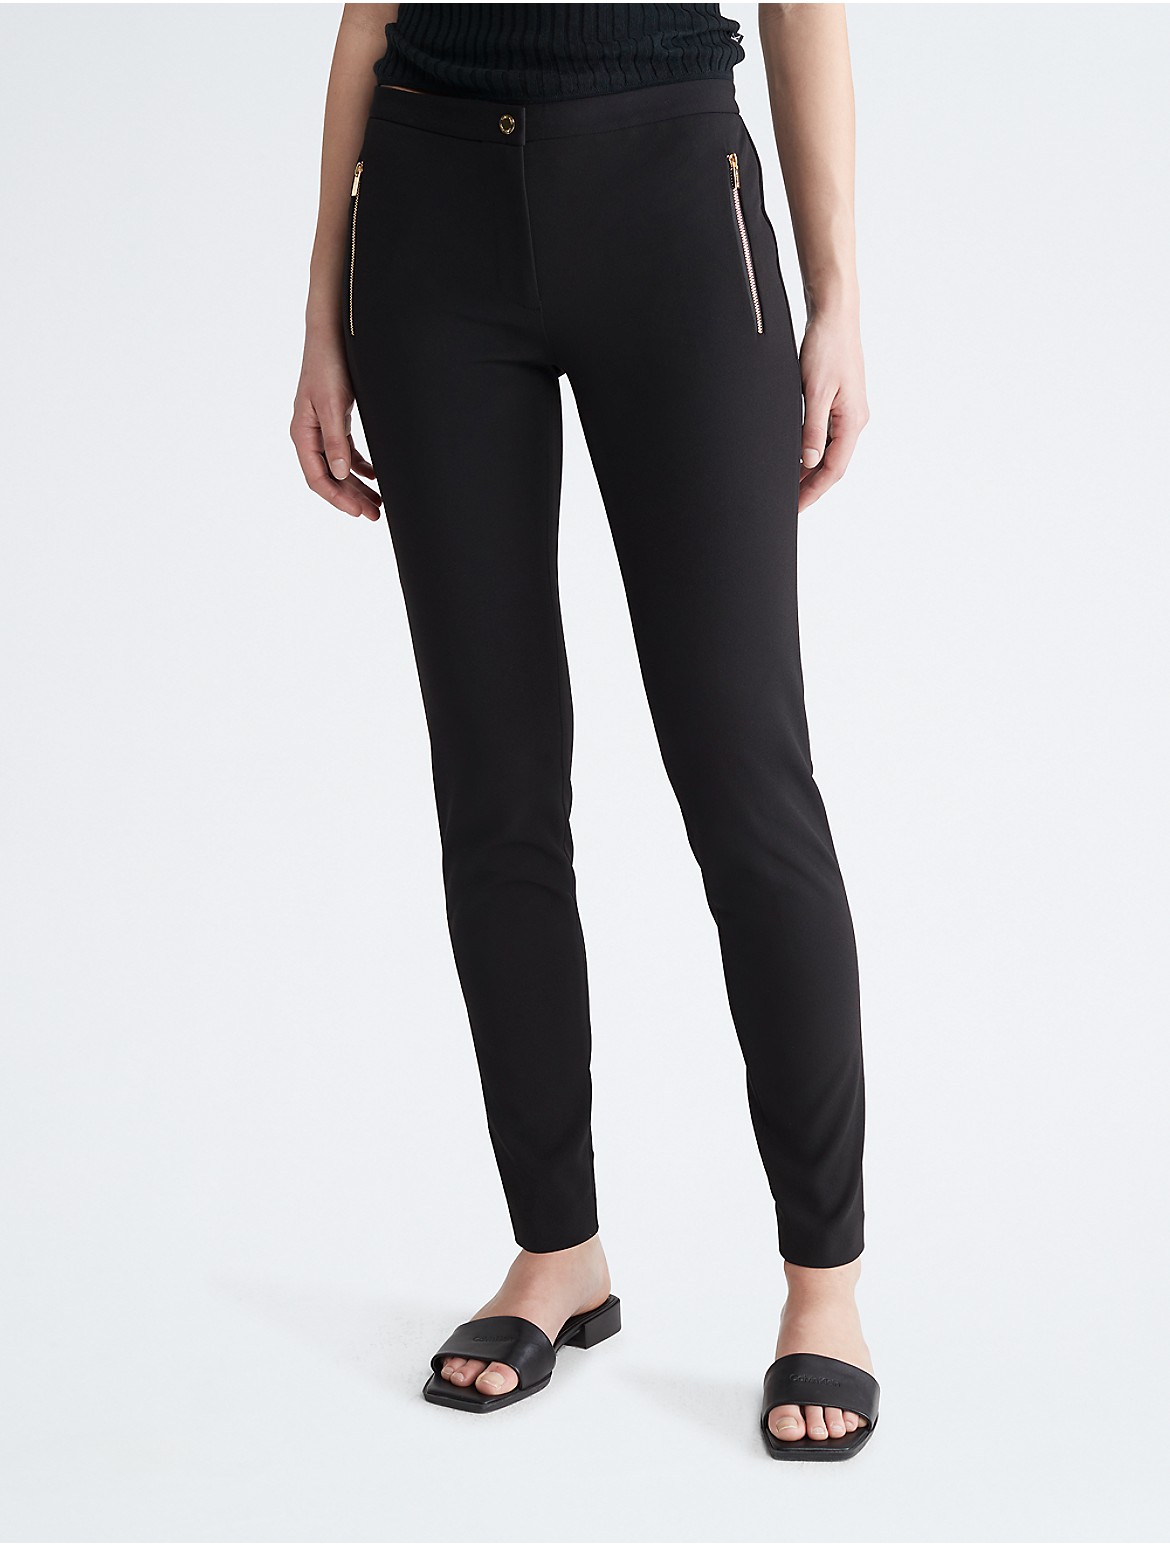 Calvin Klein Women's Zip Pocket Slim Fit Pants - Black - 6